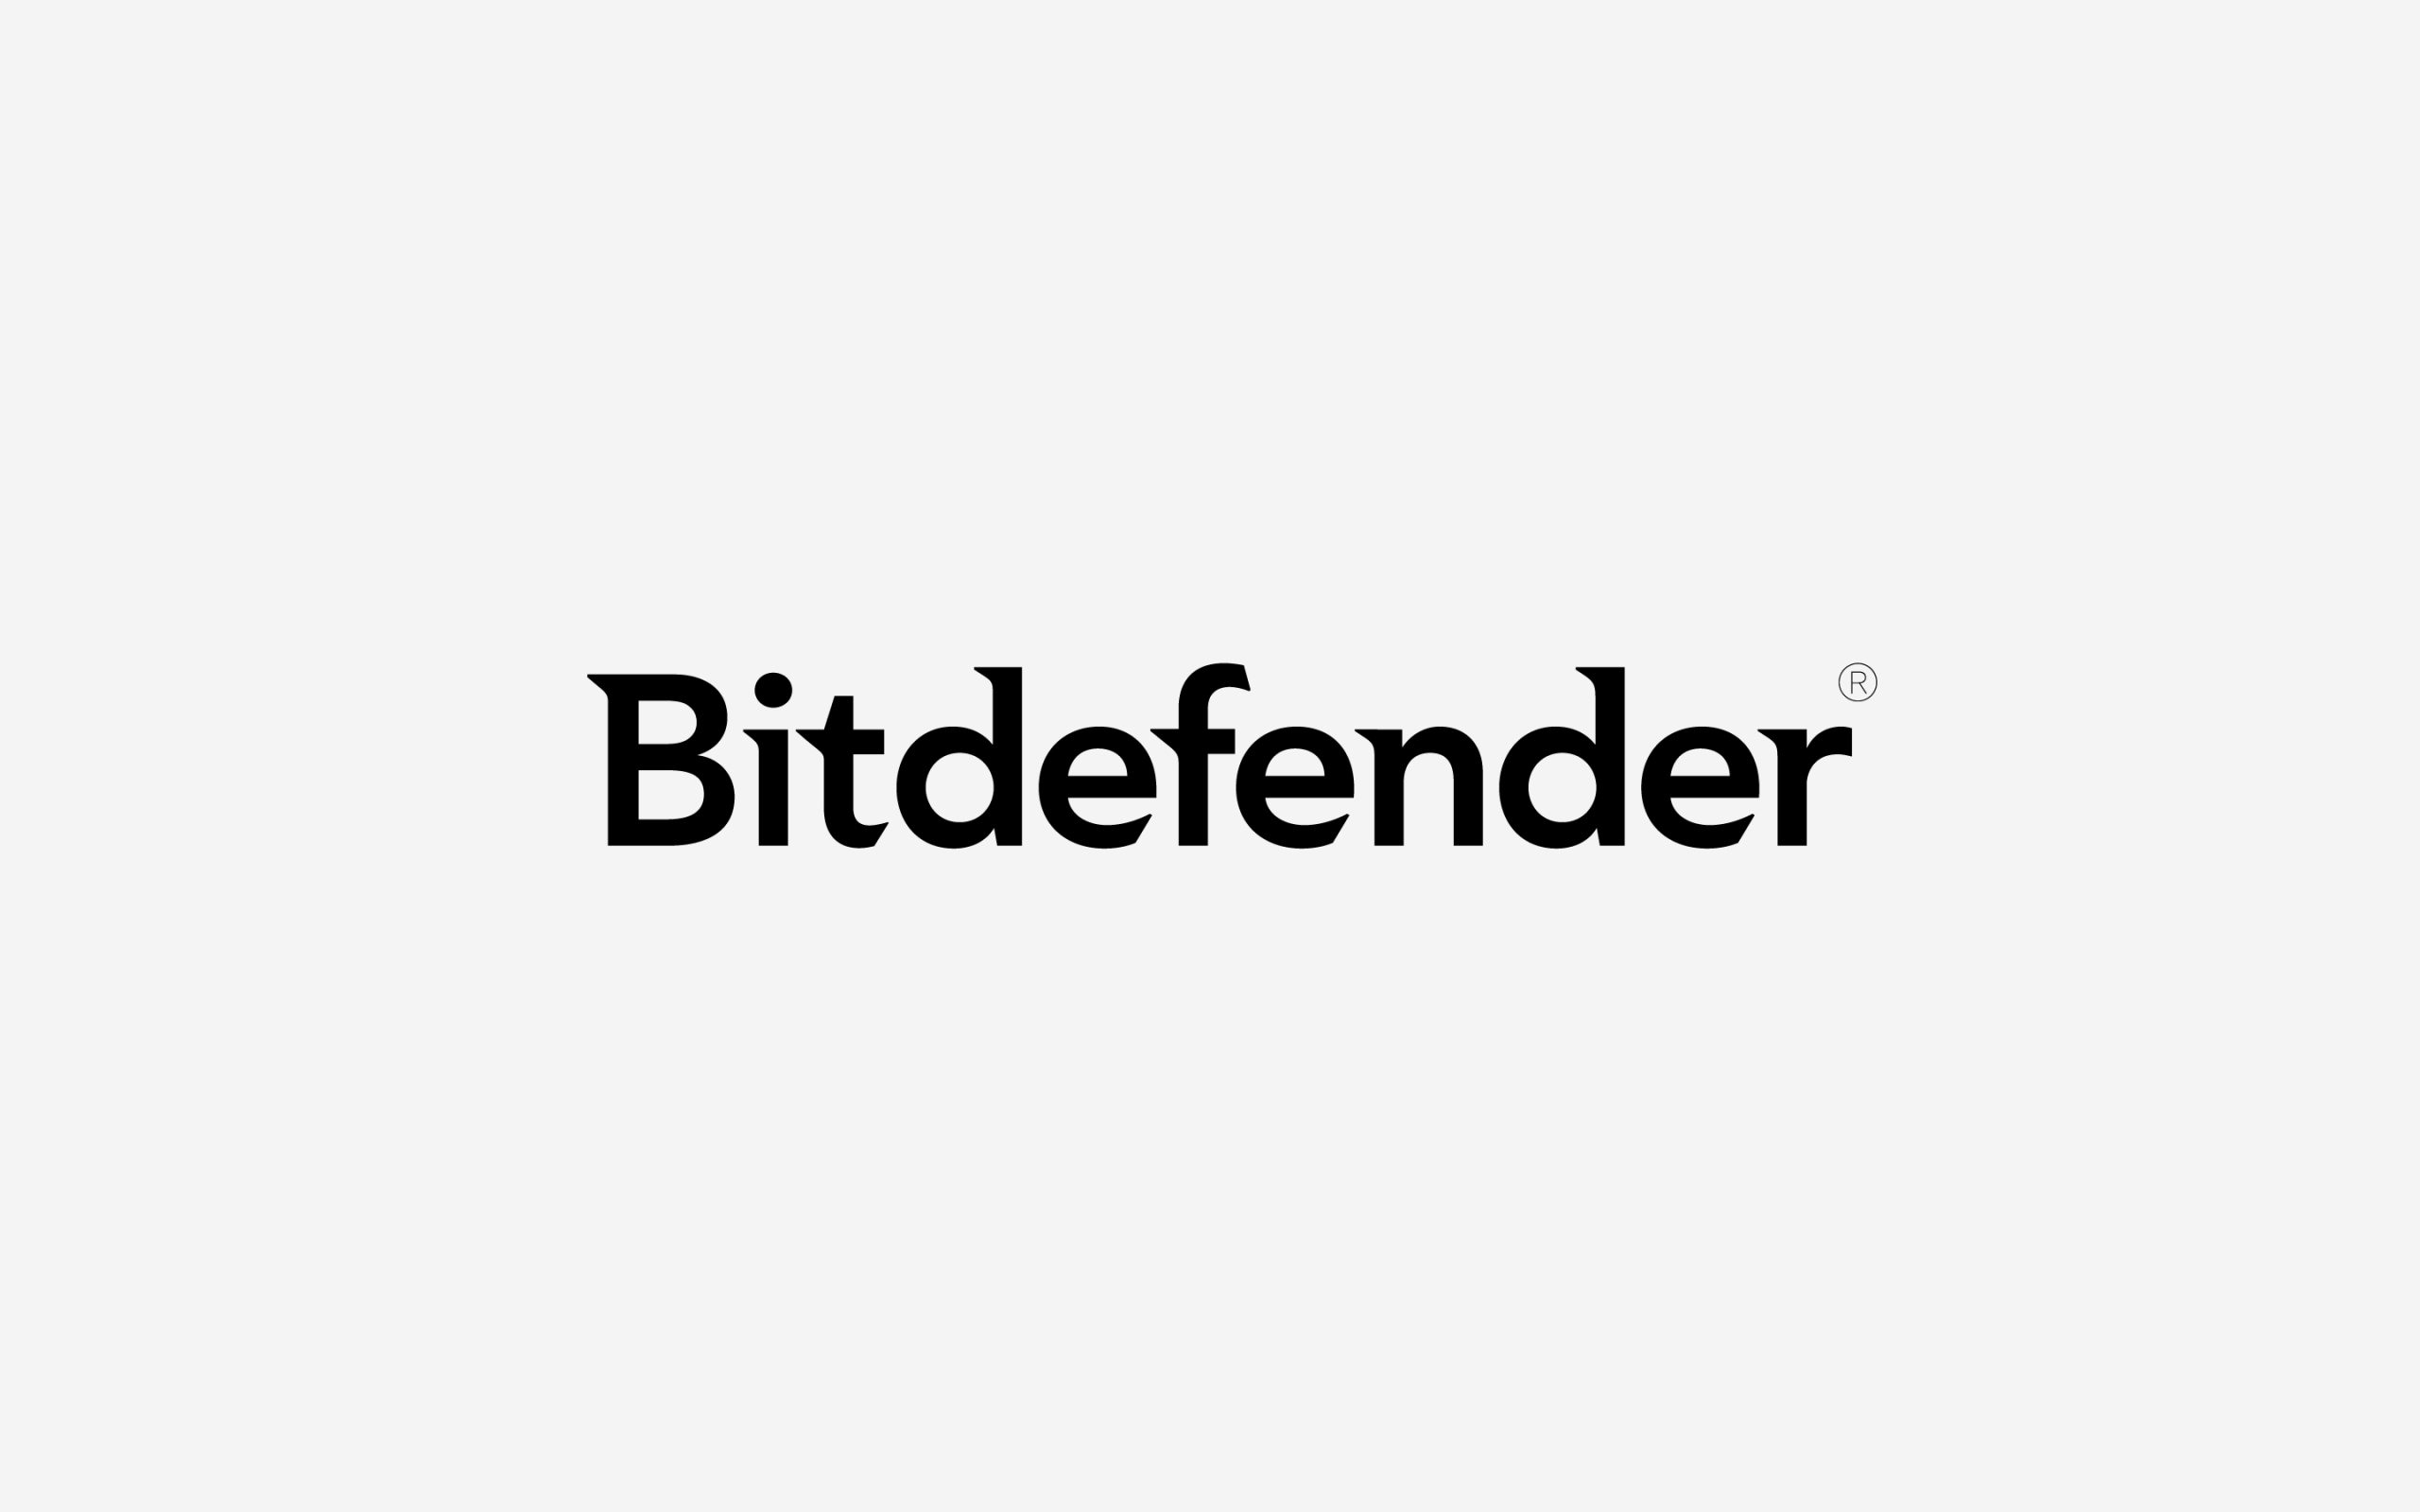 Bitdefender Antivirus Review (2022)